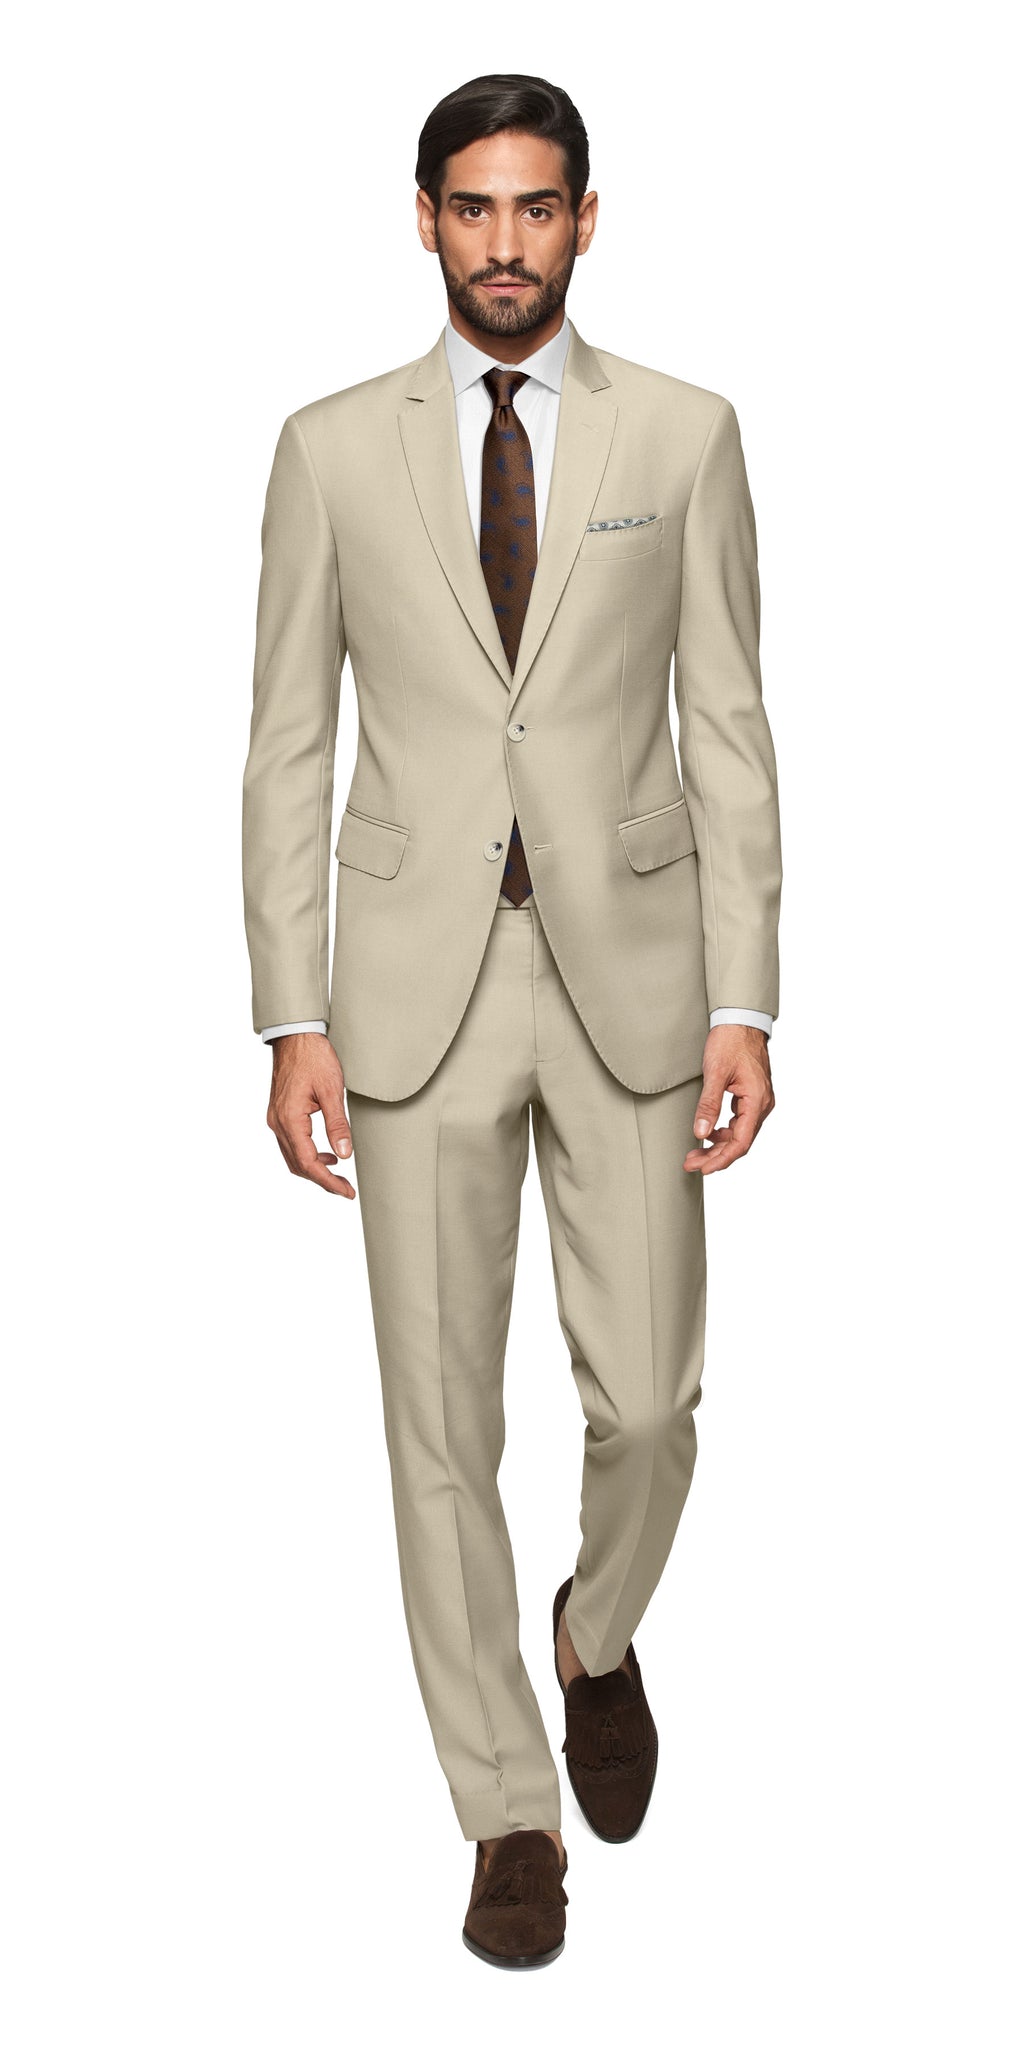 Palermo Beige Suit